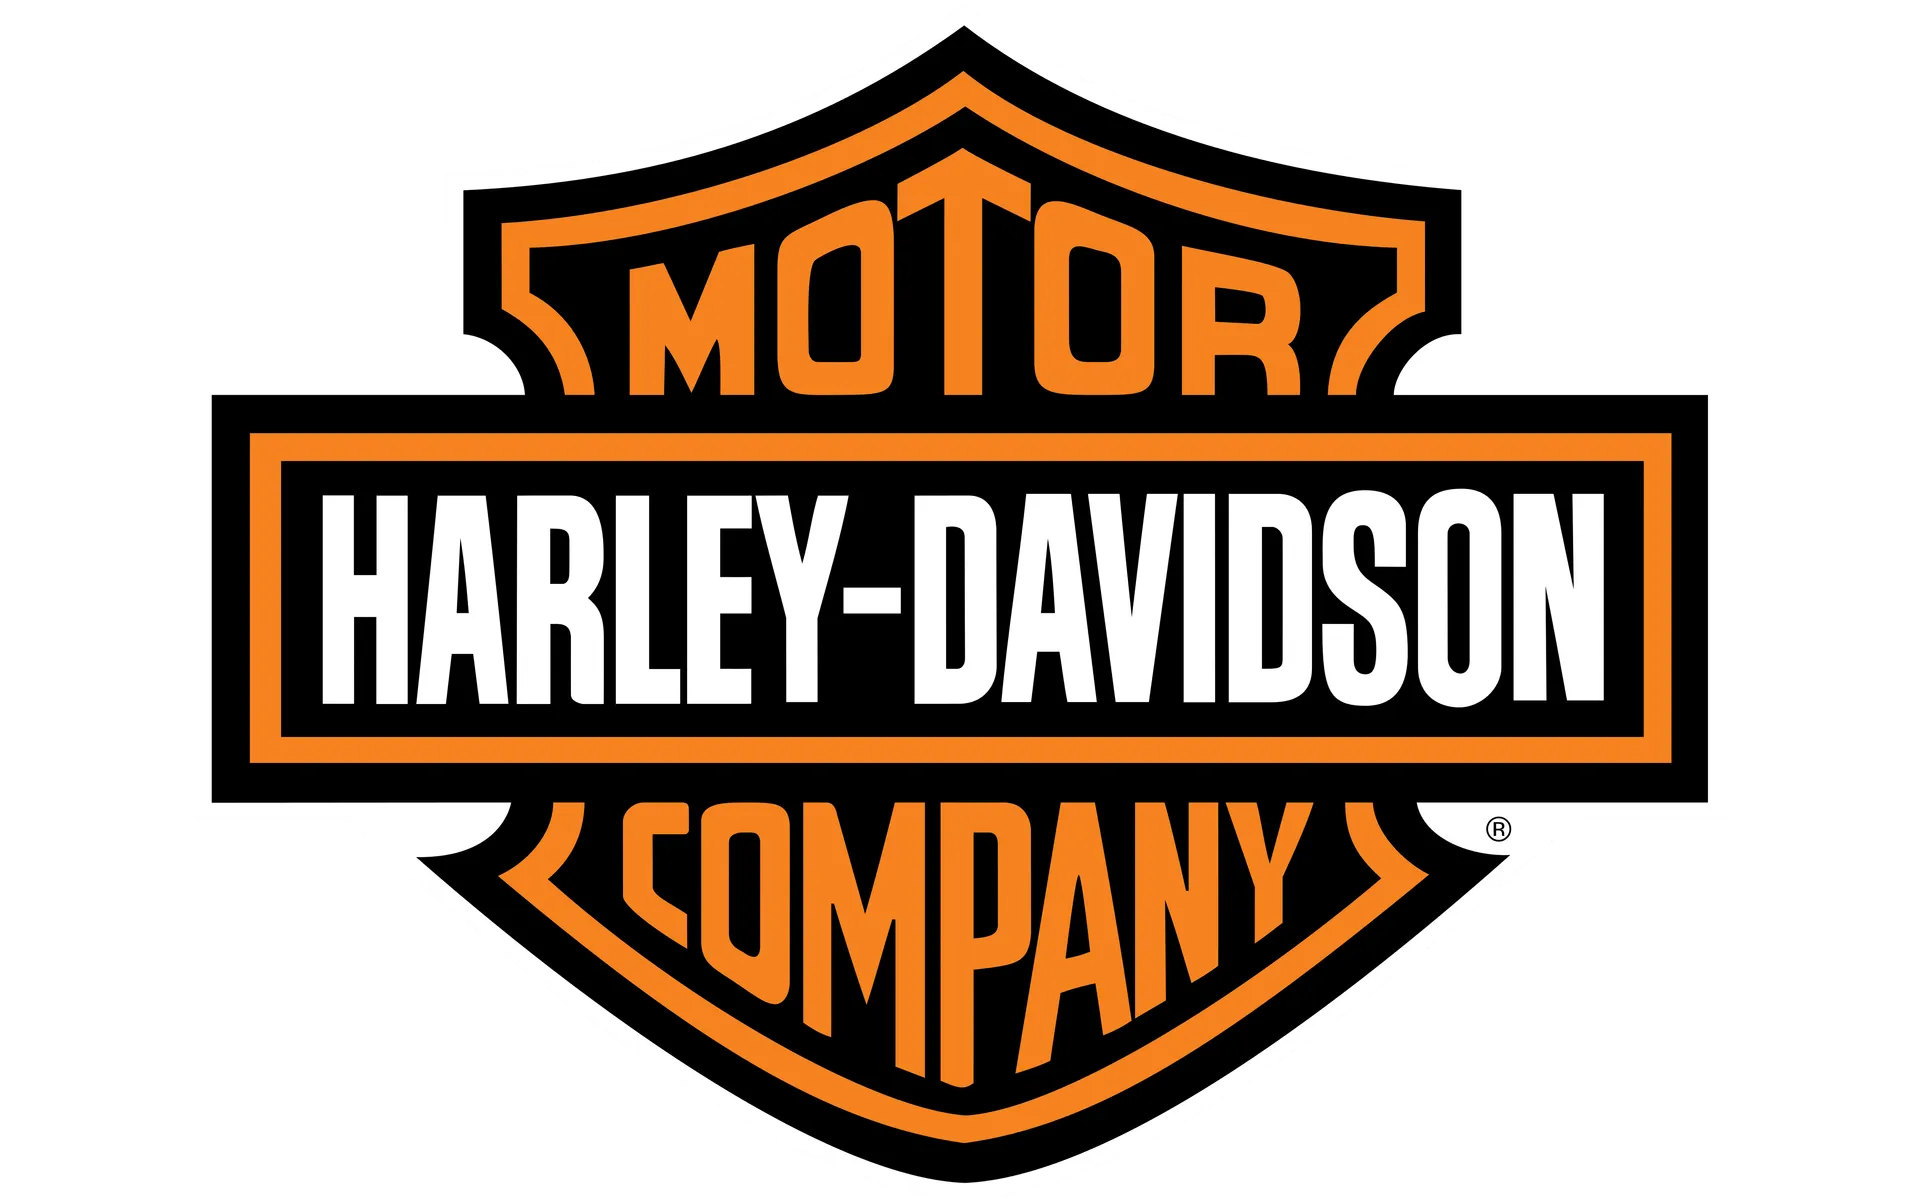 HARLEY DAVIDSON logo. Current catalogue